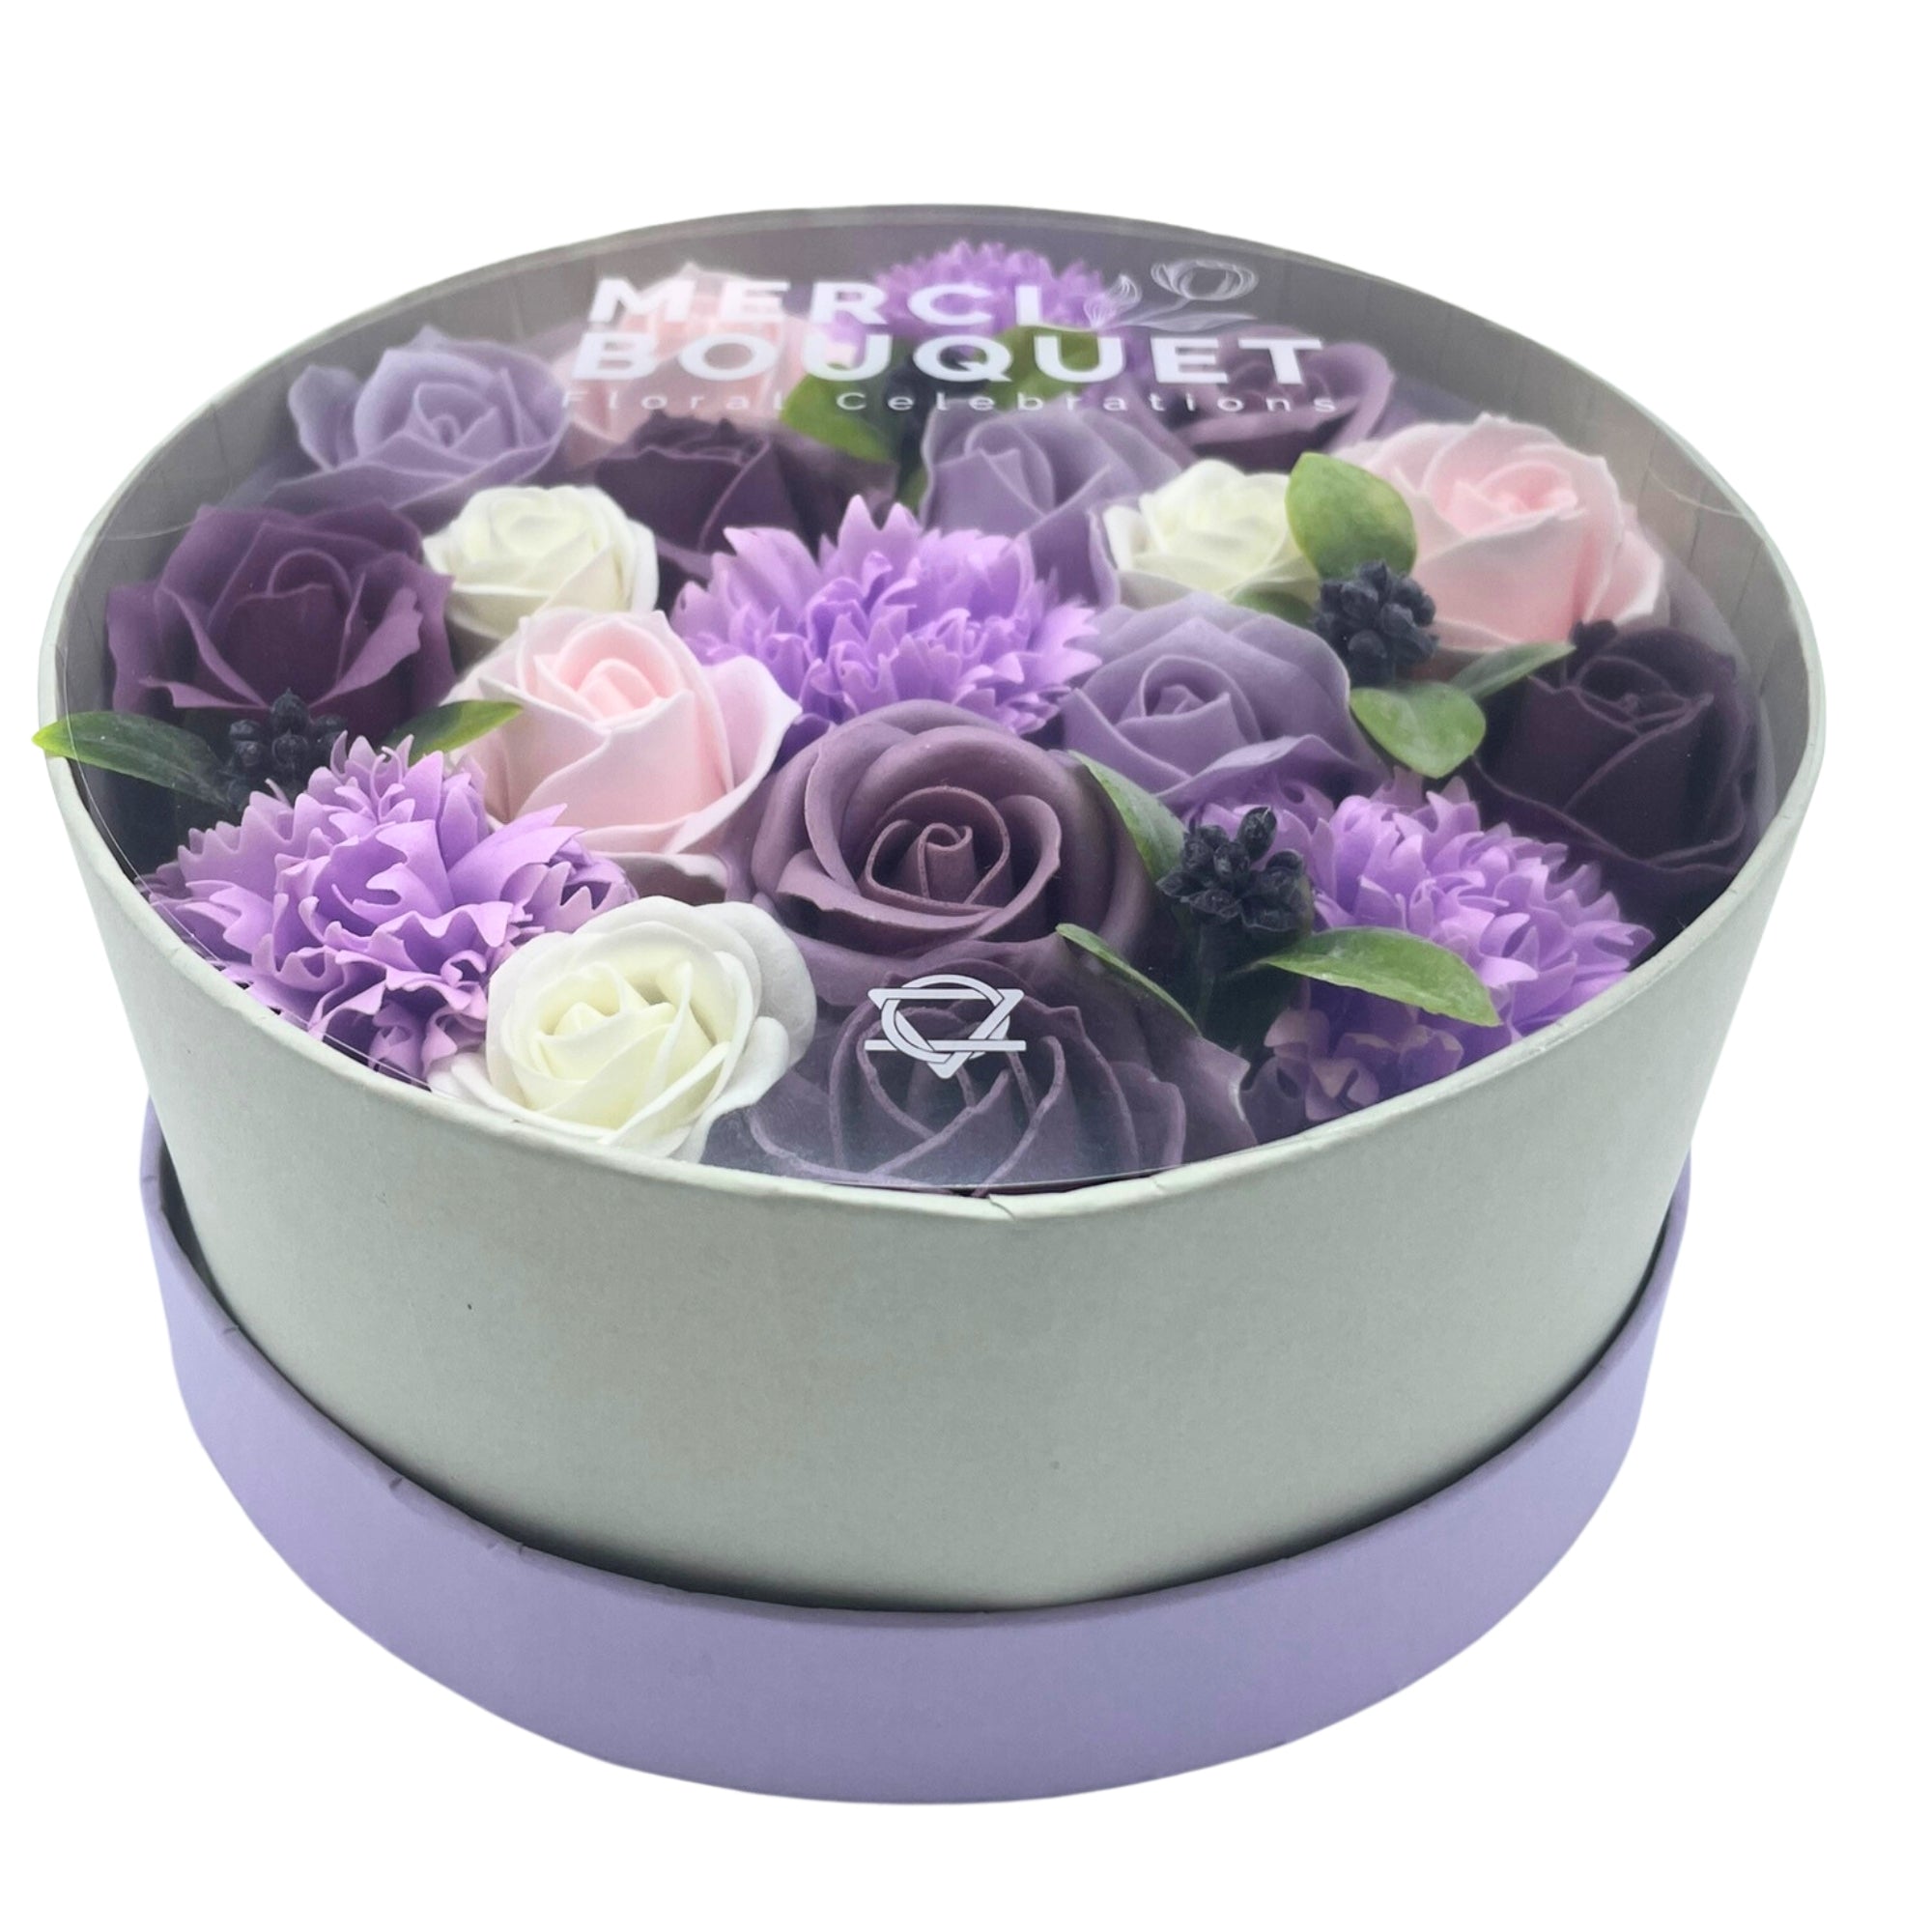 View Round Box Lavender Rose Carnation information